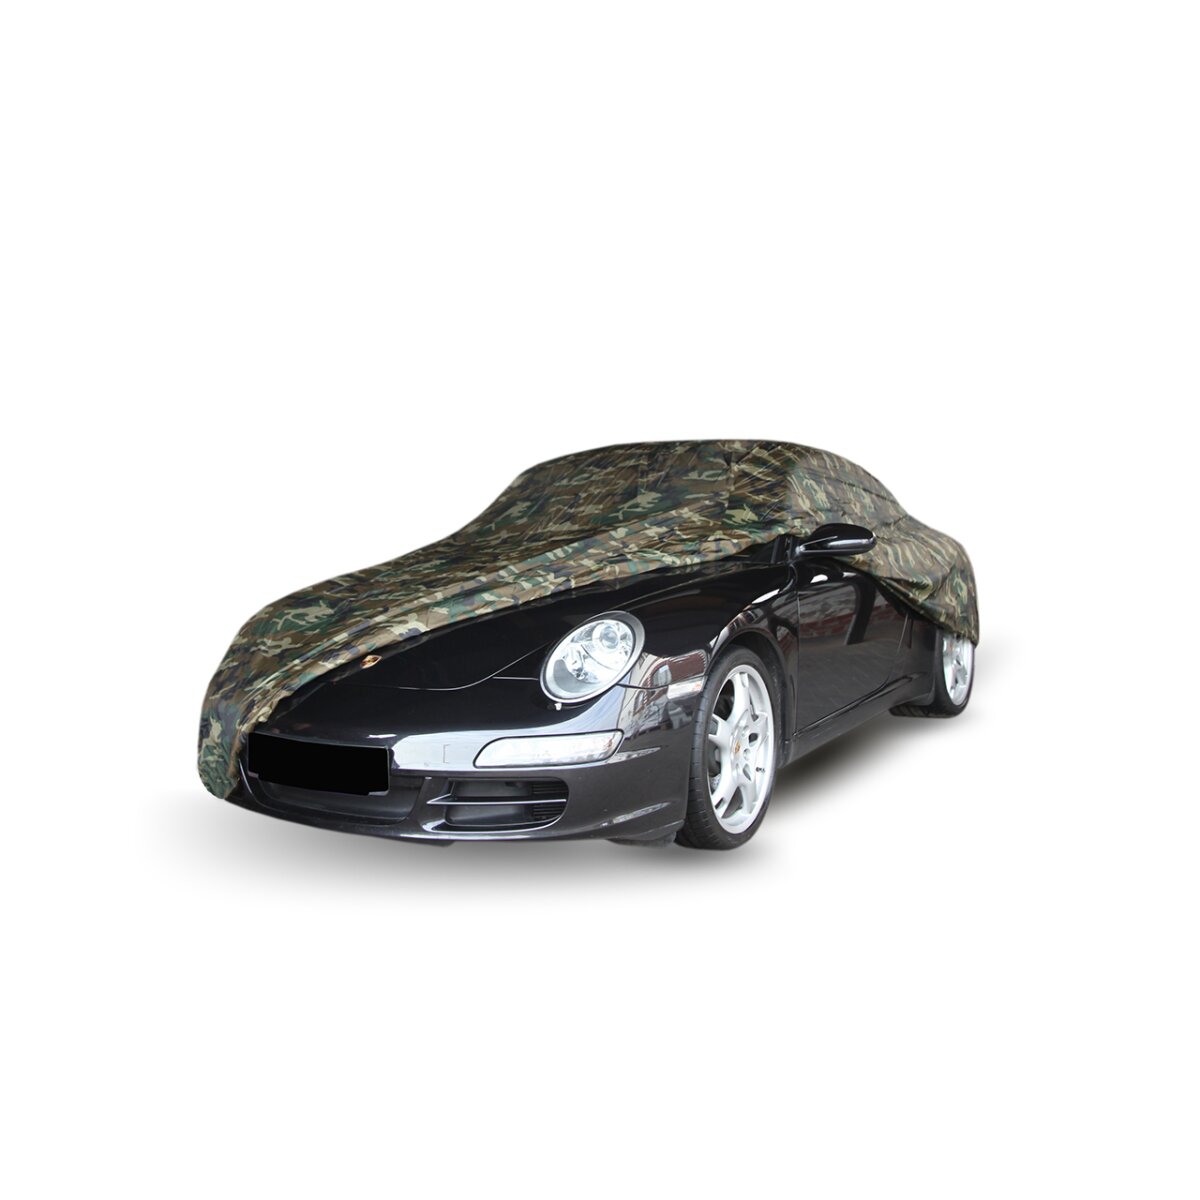 https://www.autoabdeckung.com/media/image/product/12419/lg/autoabdeckung-car-cover-camouflage-fuer-audi-s6-limousine-c4.jpg